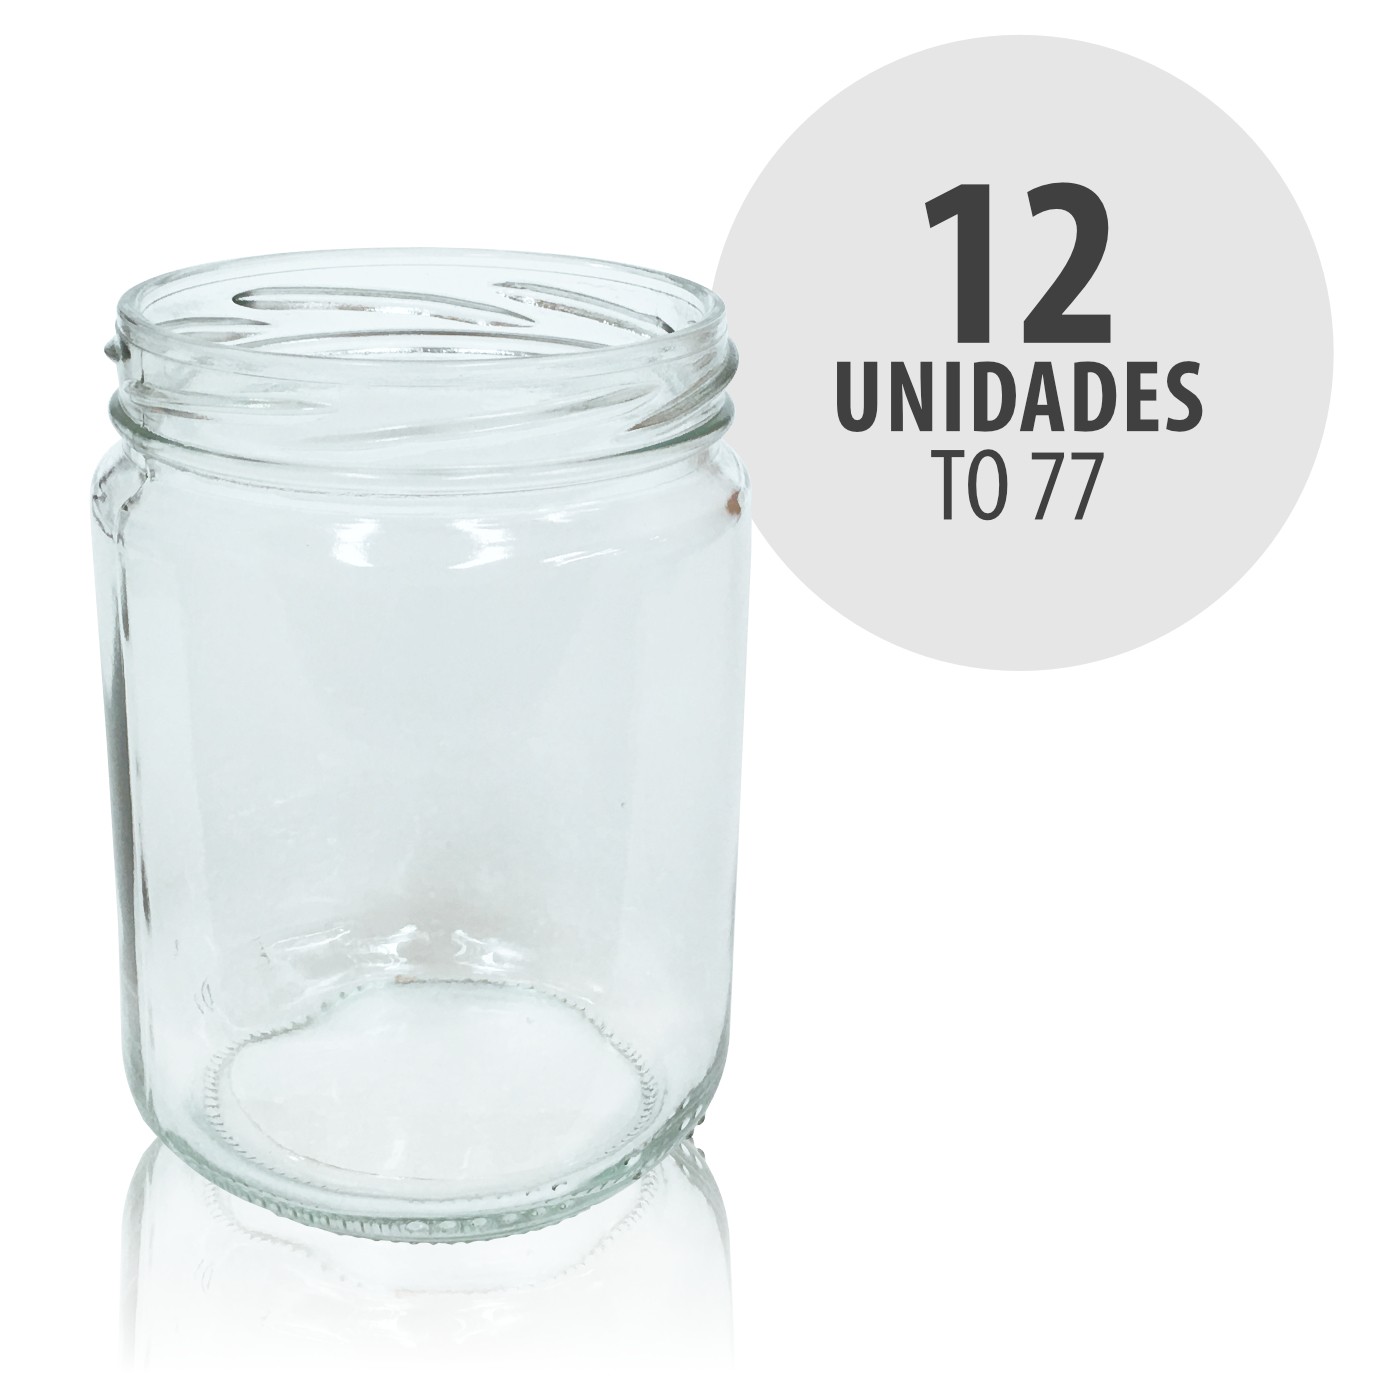 12 Tarros de cristal con tapa de rosca de 140 ml. + Ebook de 102